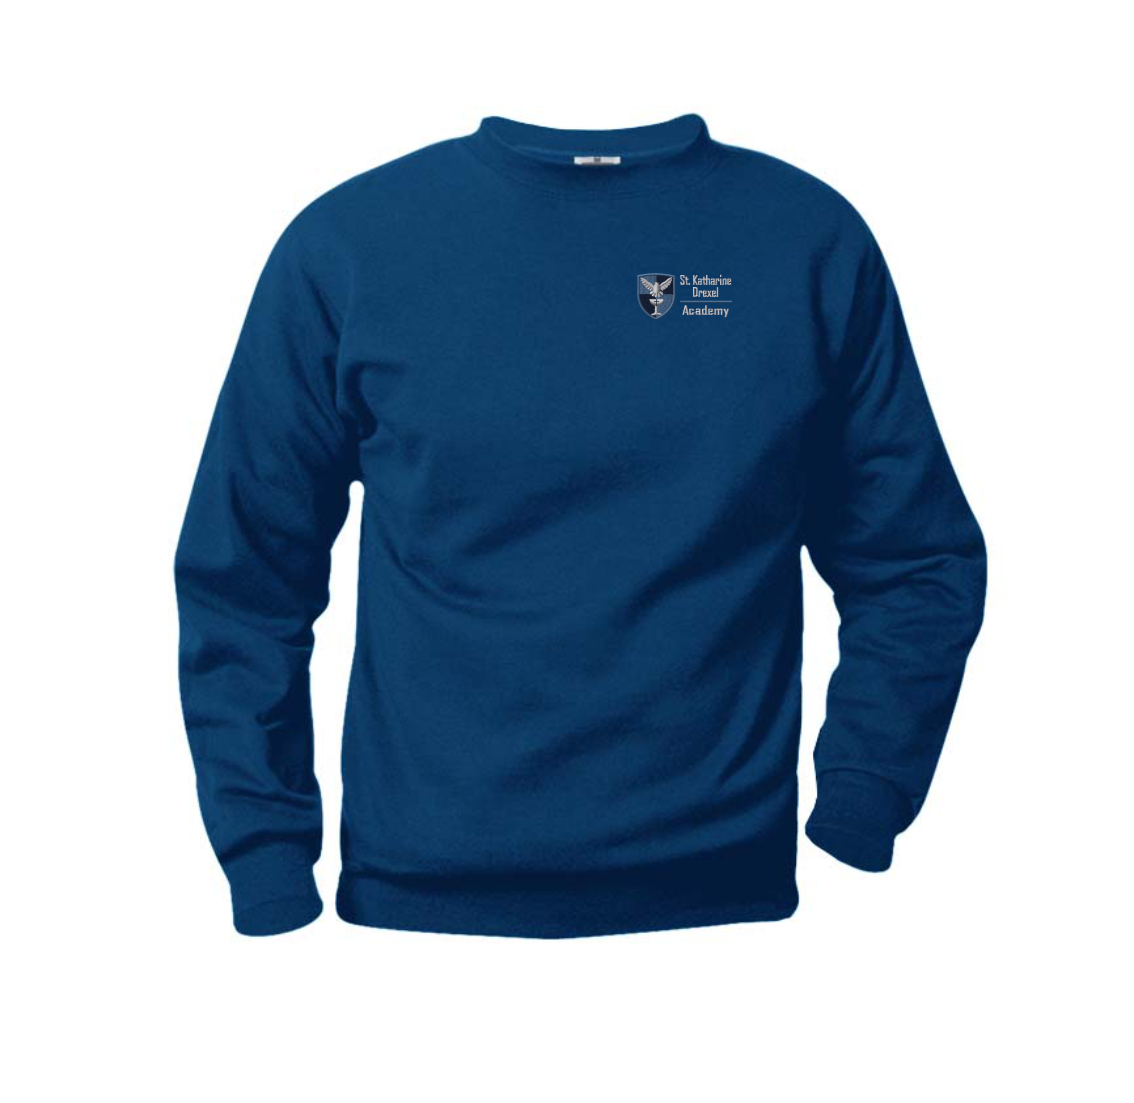 6254 SKDA Navy Crewneck Sweatshirt - The Uniform Store